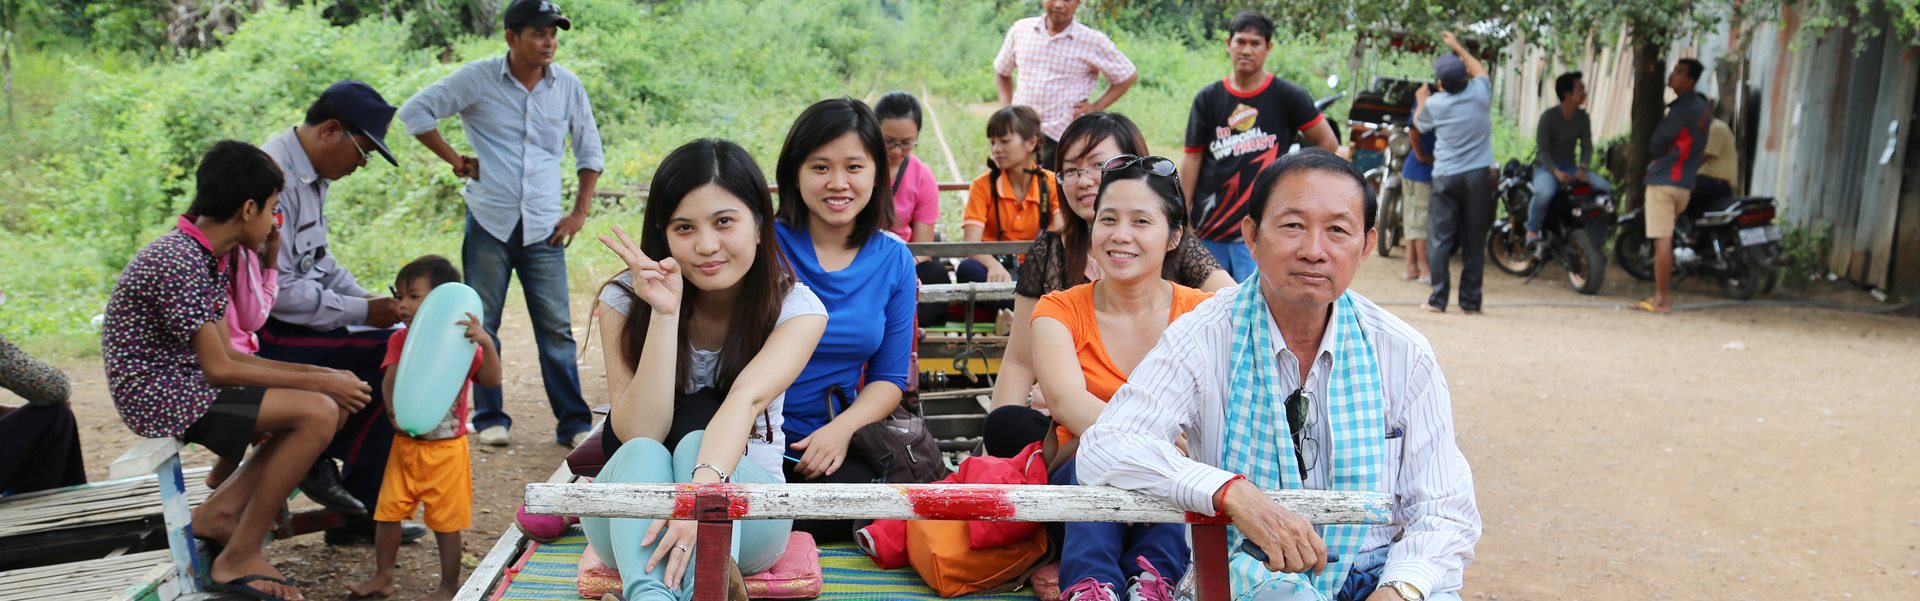 10 migliori Tour Operator in Cambogia